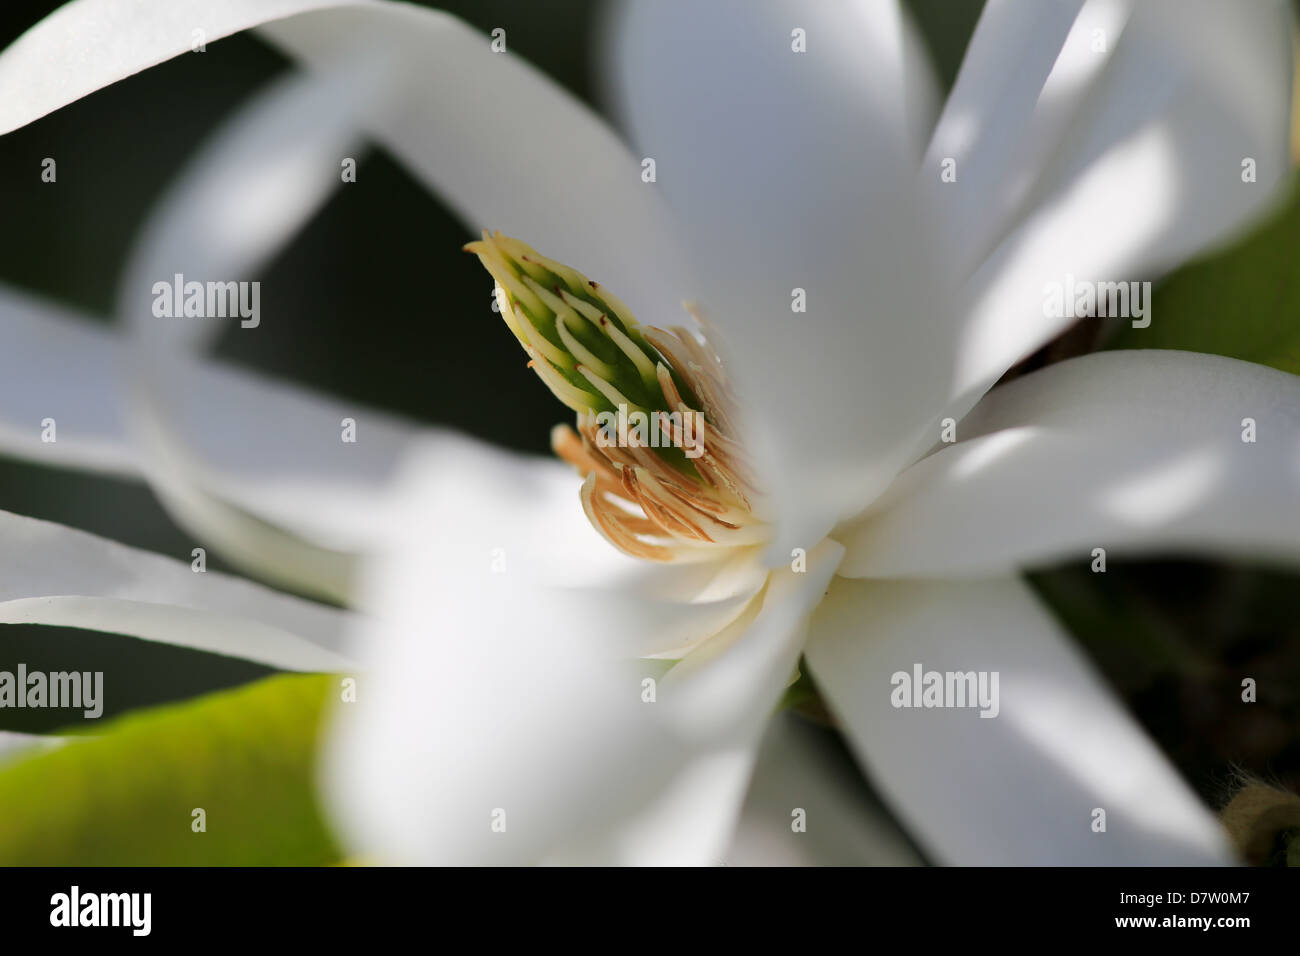 Royal Star Magnolia flower close-up photo, May 2013 Stock Photo